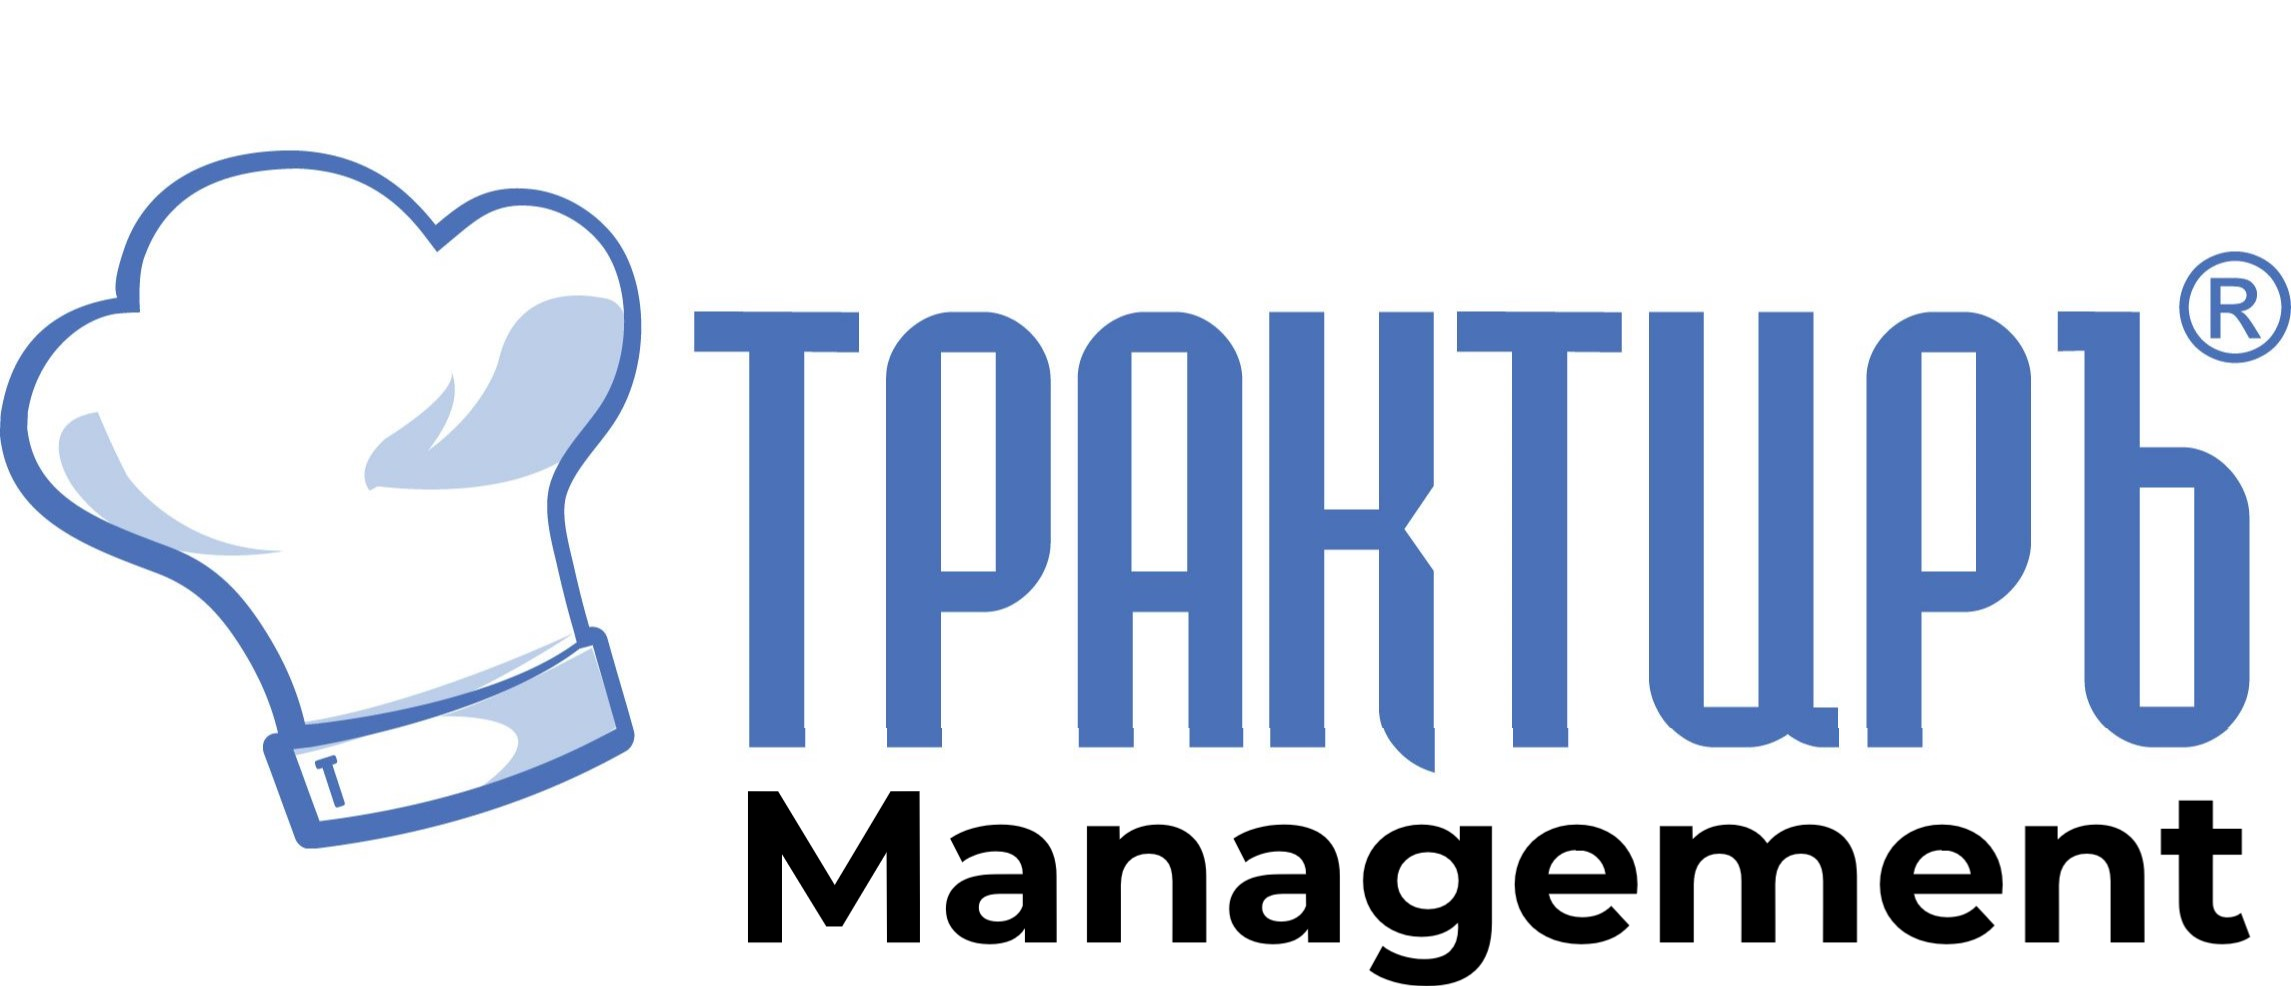 Трактиръ: Management в Севастополе